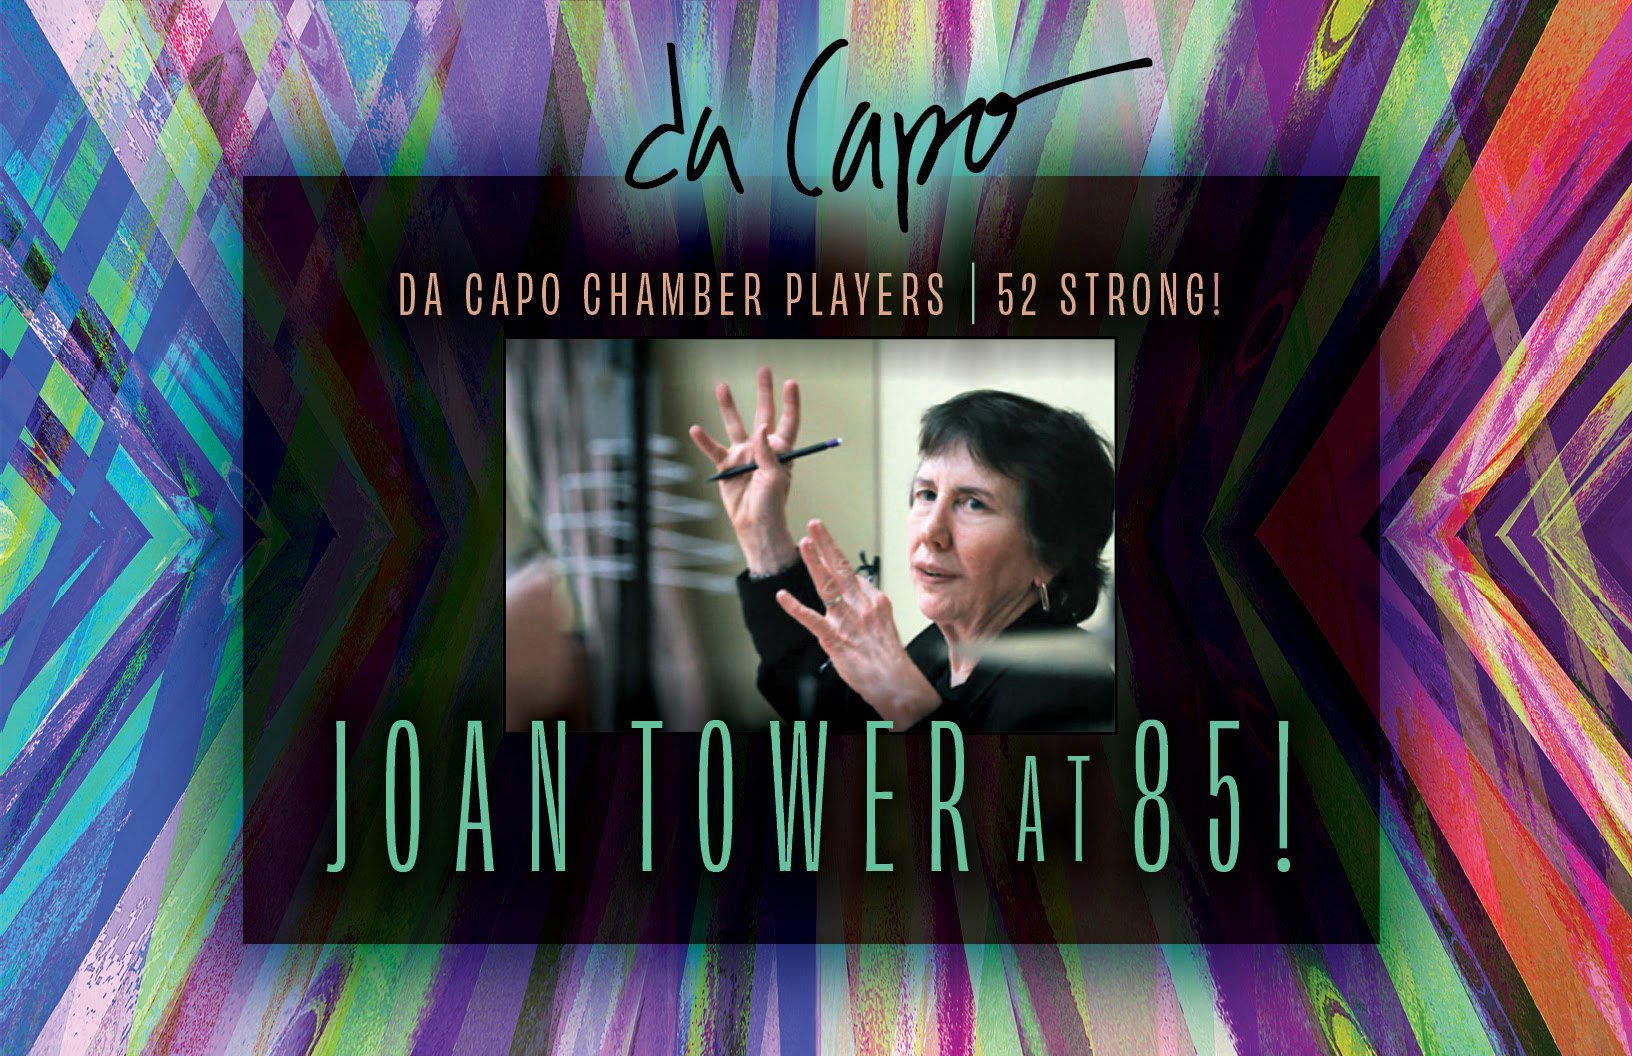 Da Capo Chamber Players: Joan Tower at 85!